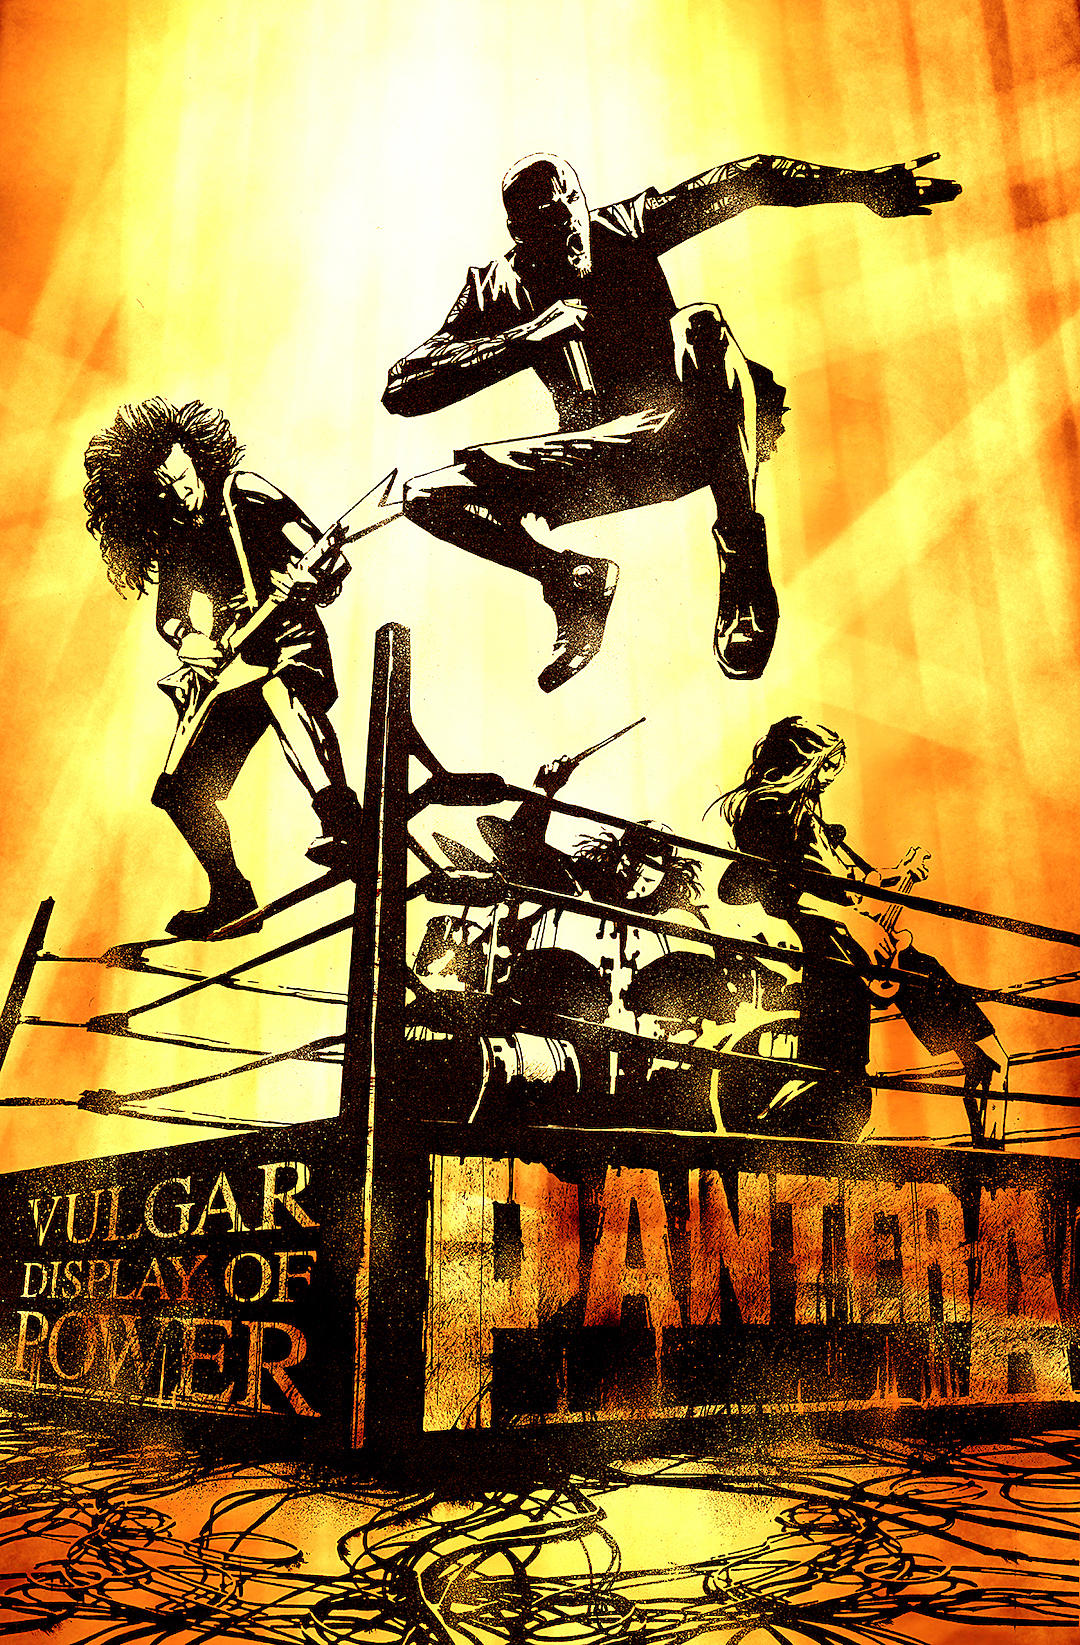 Pantera, 'Vulgar Display of Power' Graphic Novel